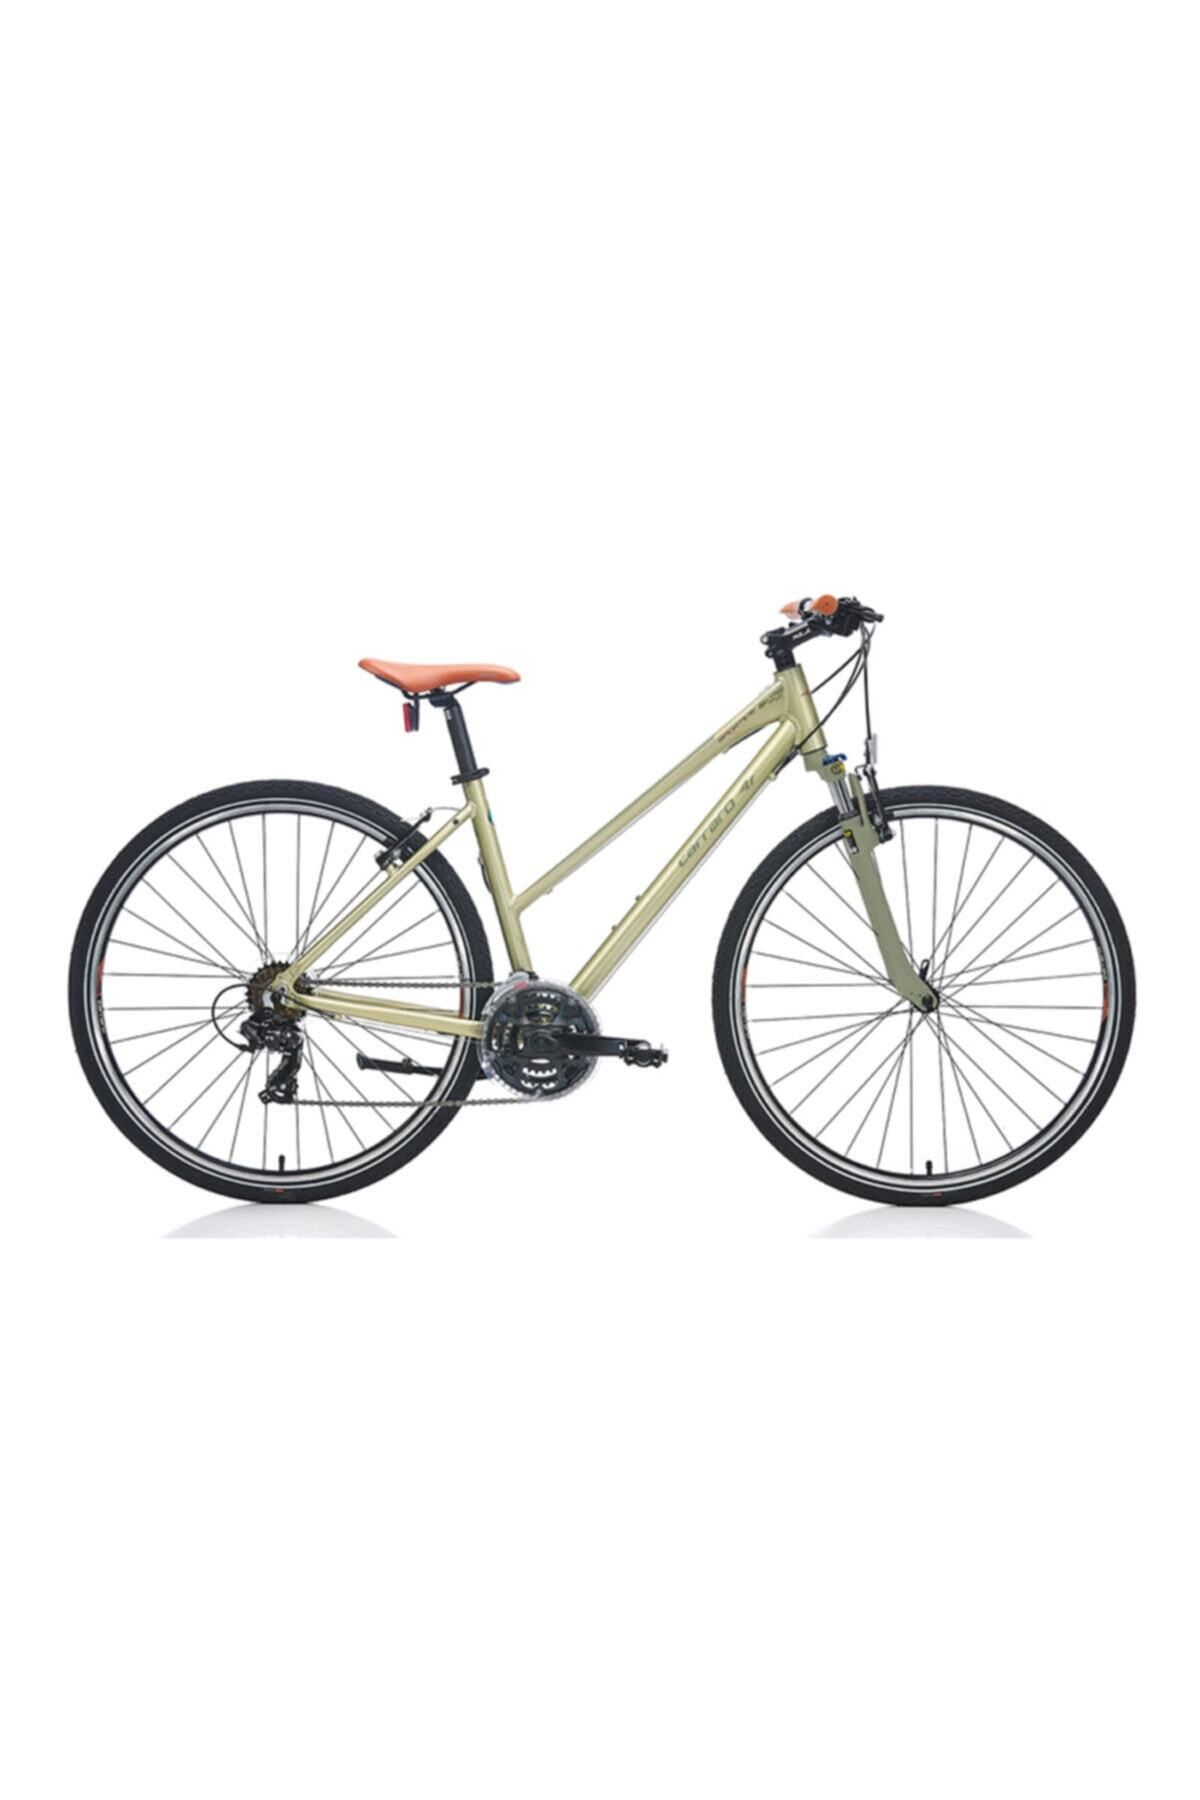 Carraro Sportive 222 28 jant Şehir & Tur Bisikleti (Lime Yeşil Koyu Yeşil Kahverengi) 41 Kadro